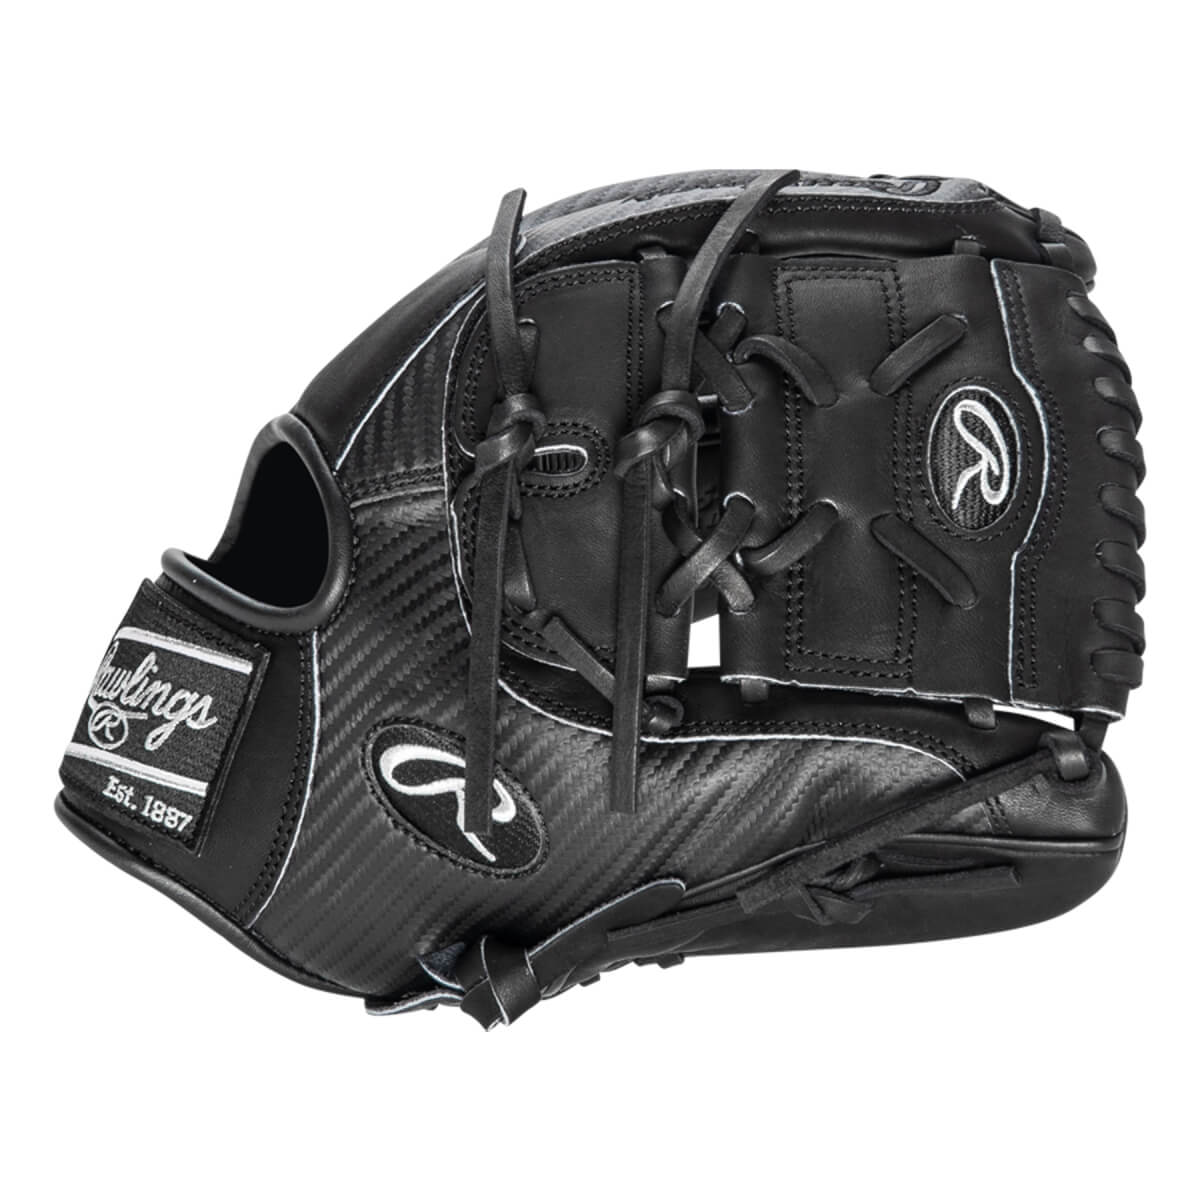 Rawlings Heart of the Hide Hyper Shell 11.75" Baseball Glove: PRO205-9BCF